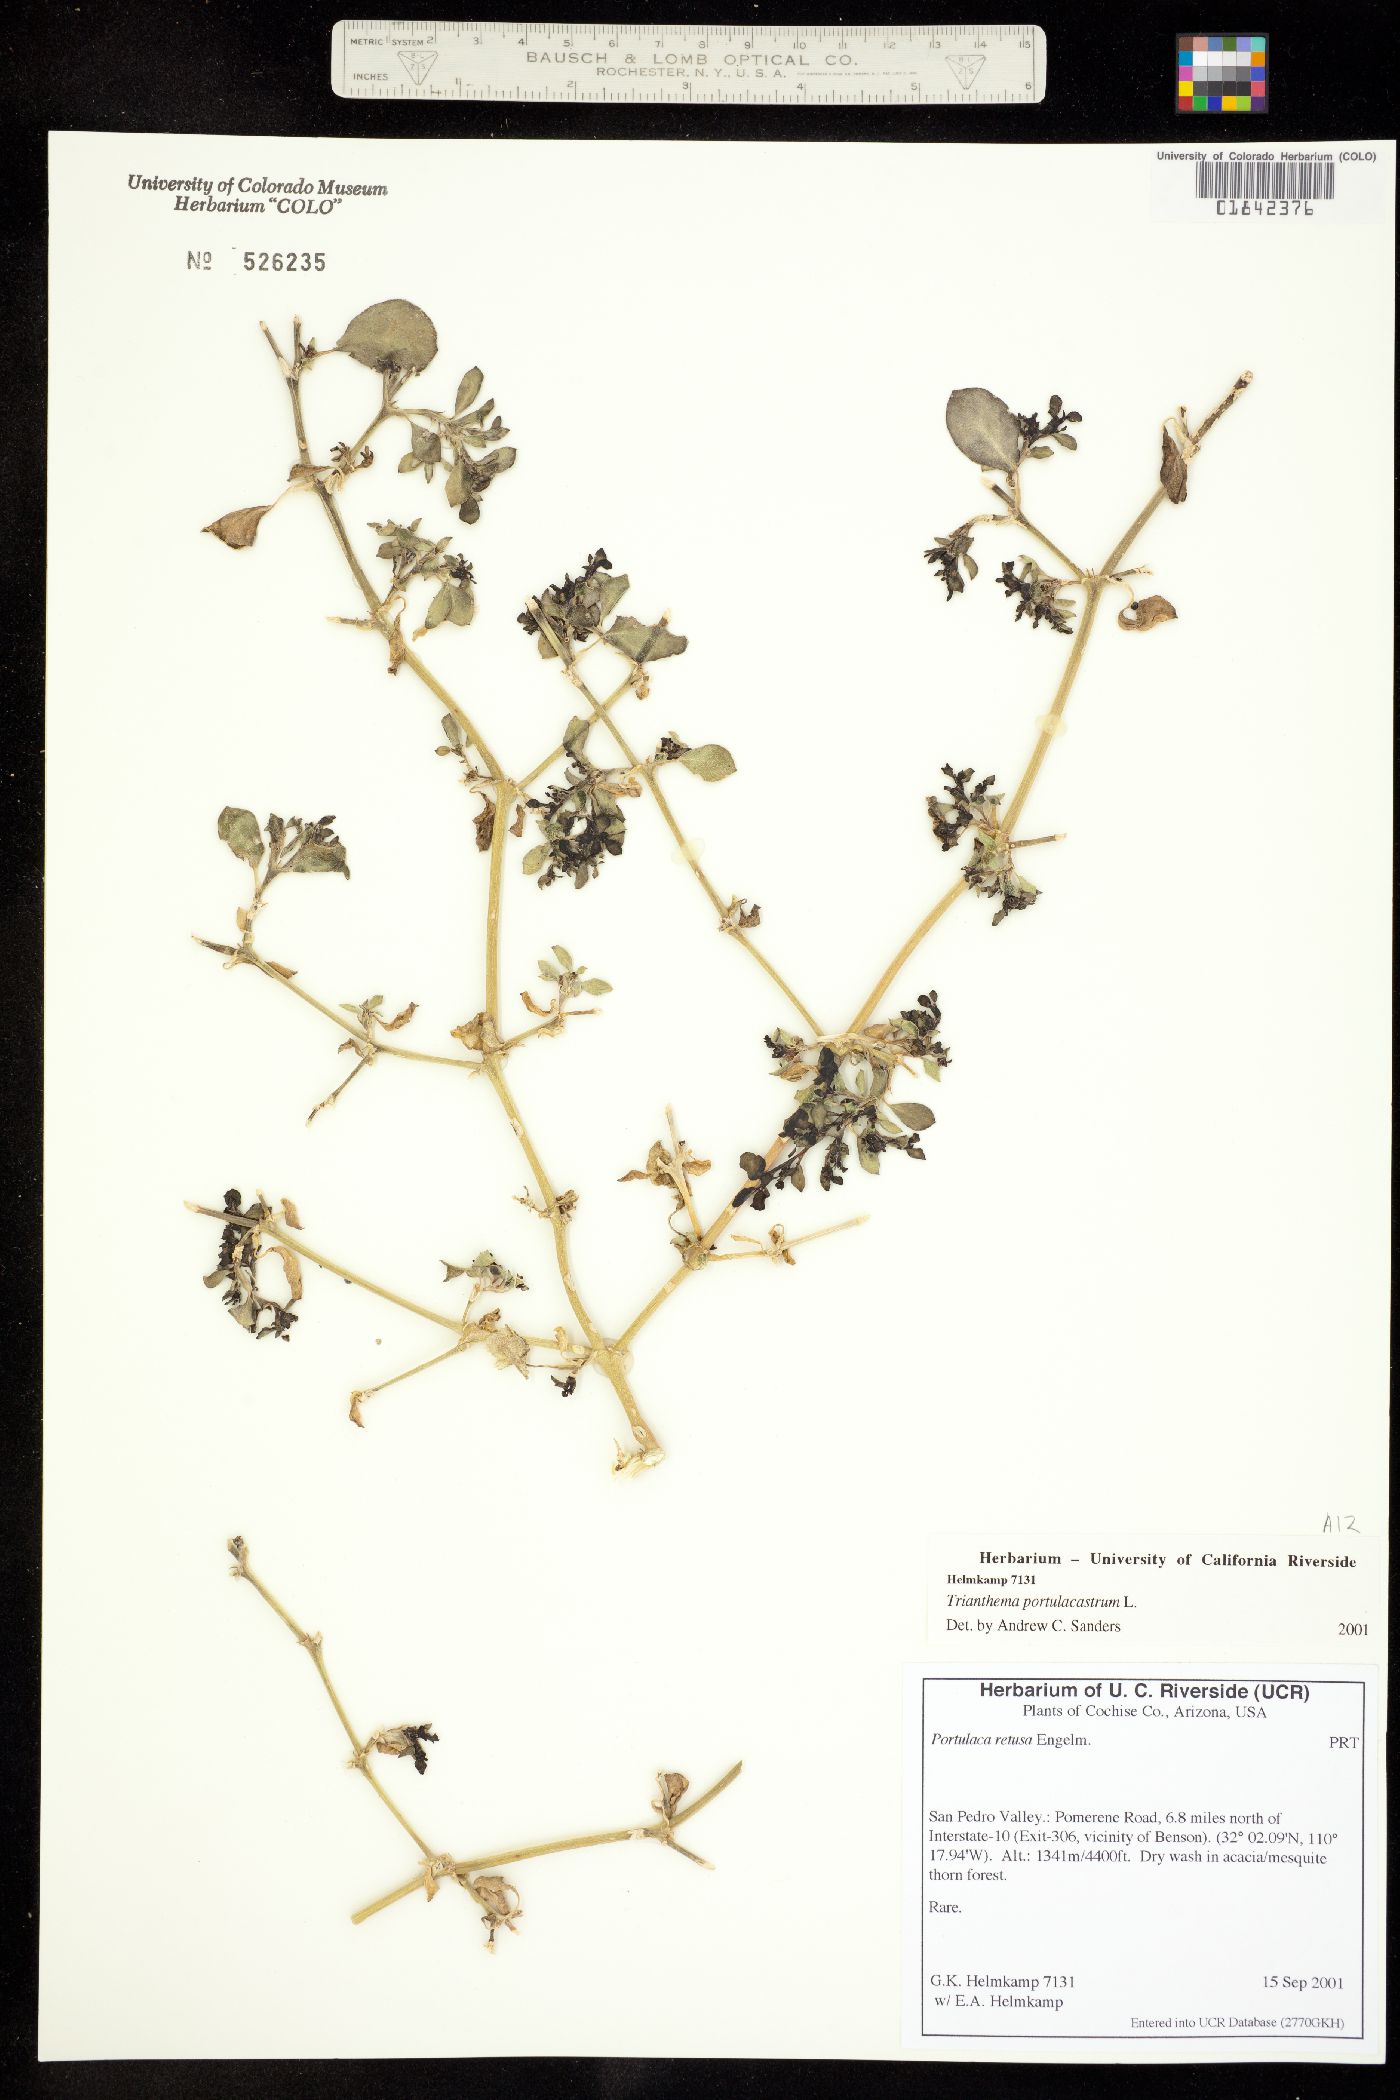 Trianthema image